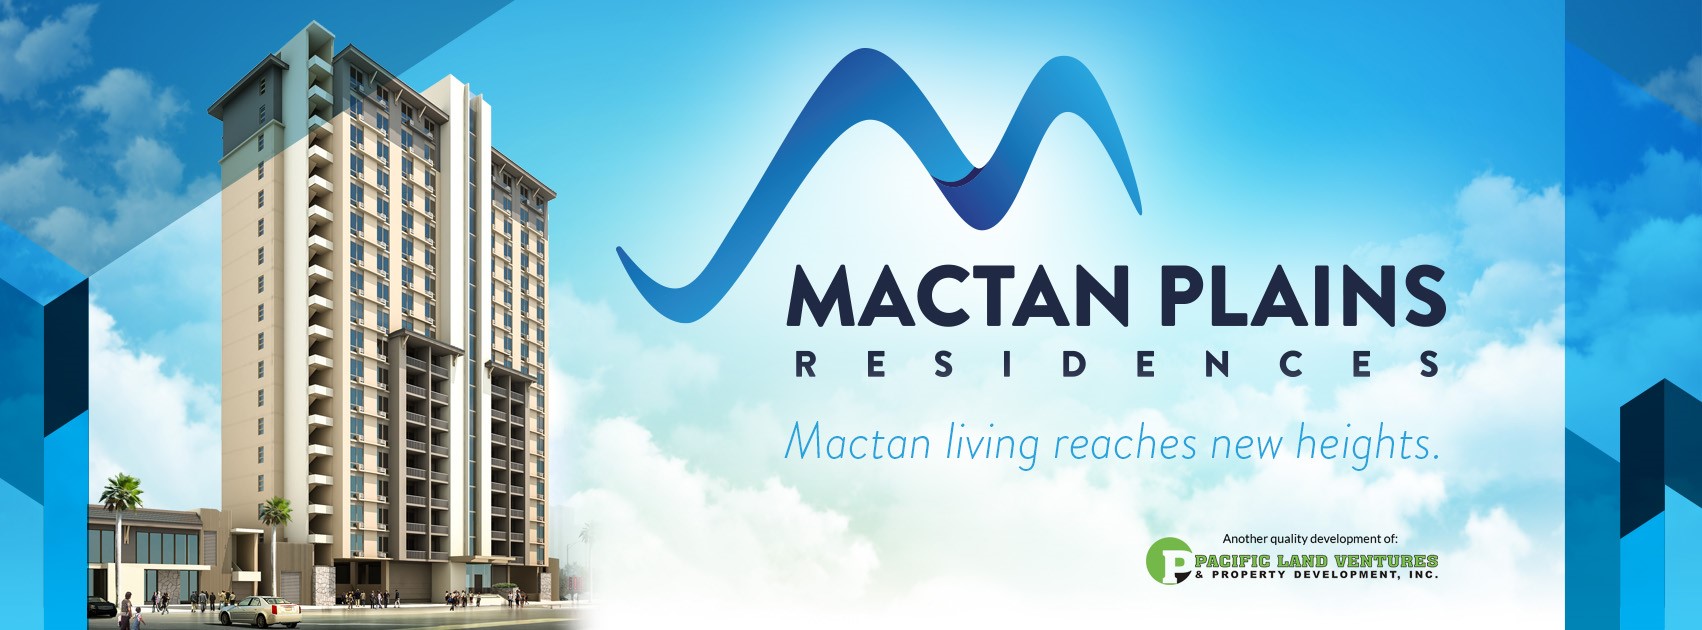 Mactan Plains Residences